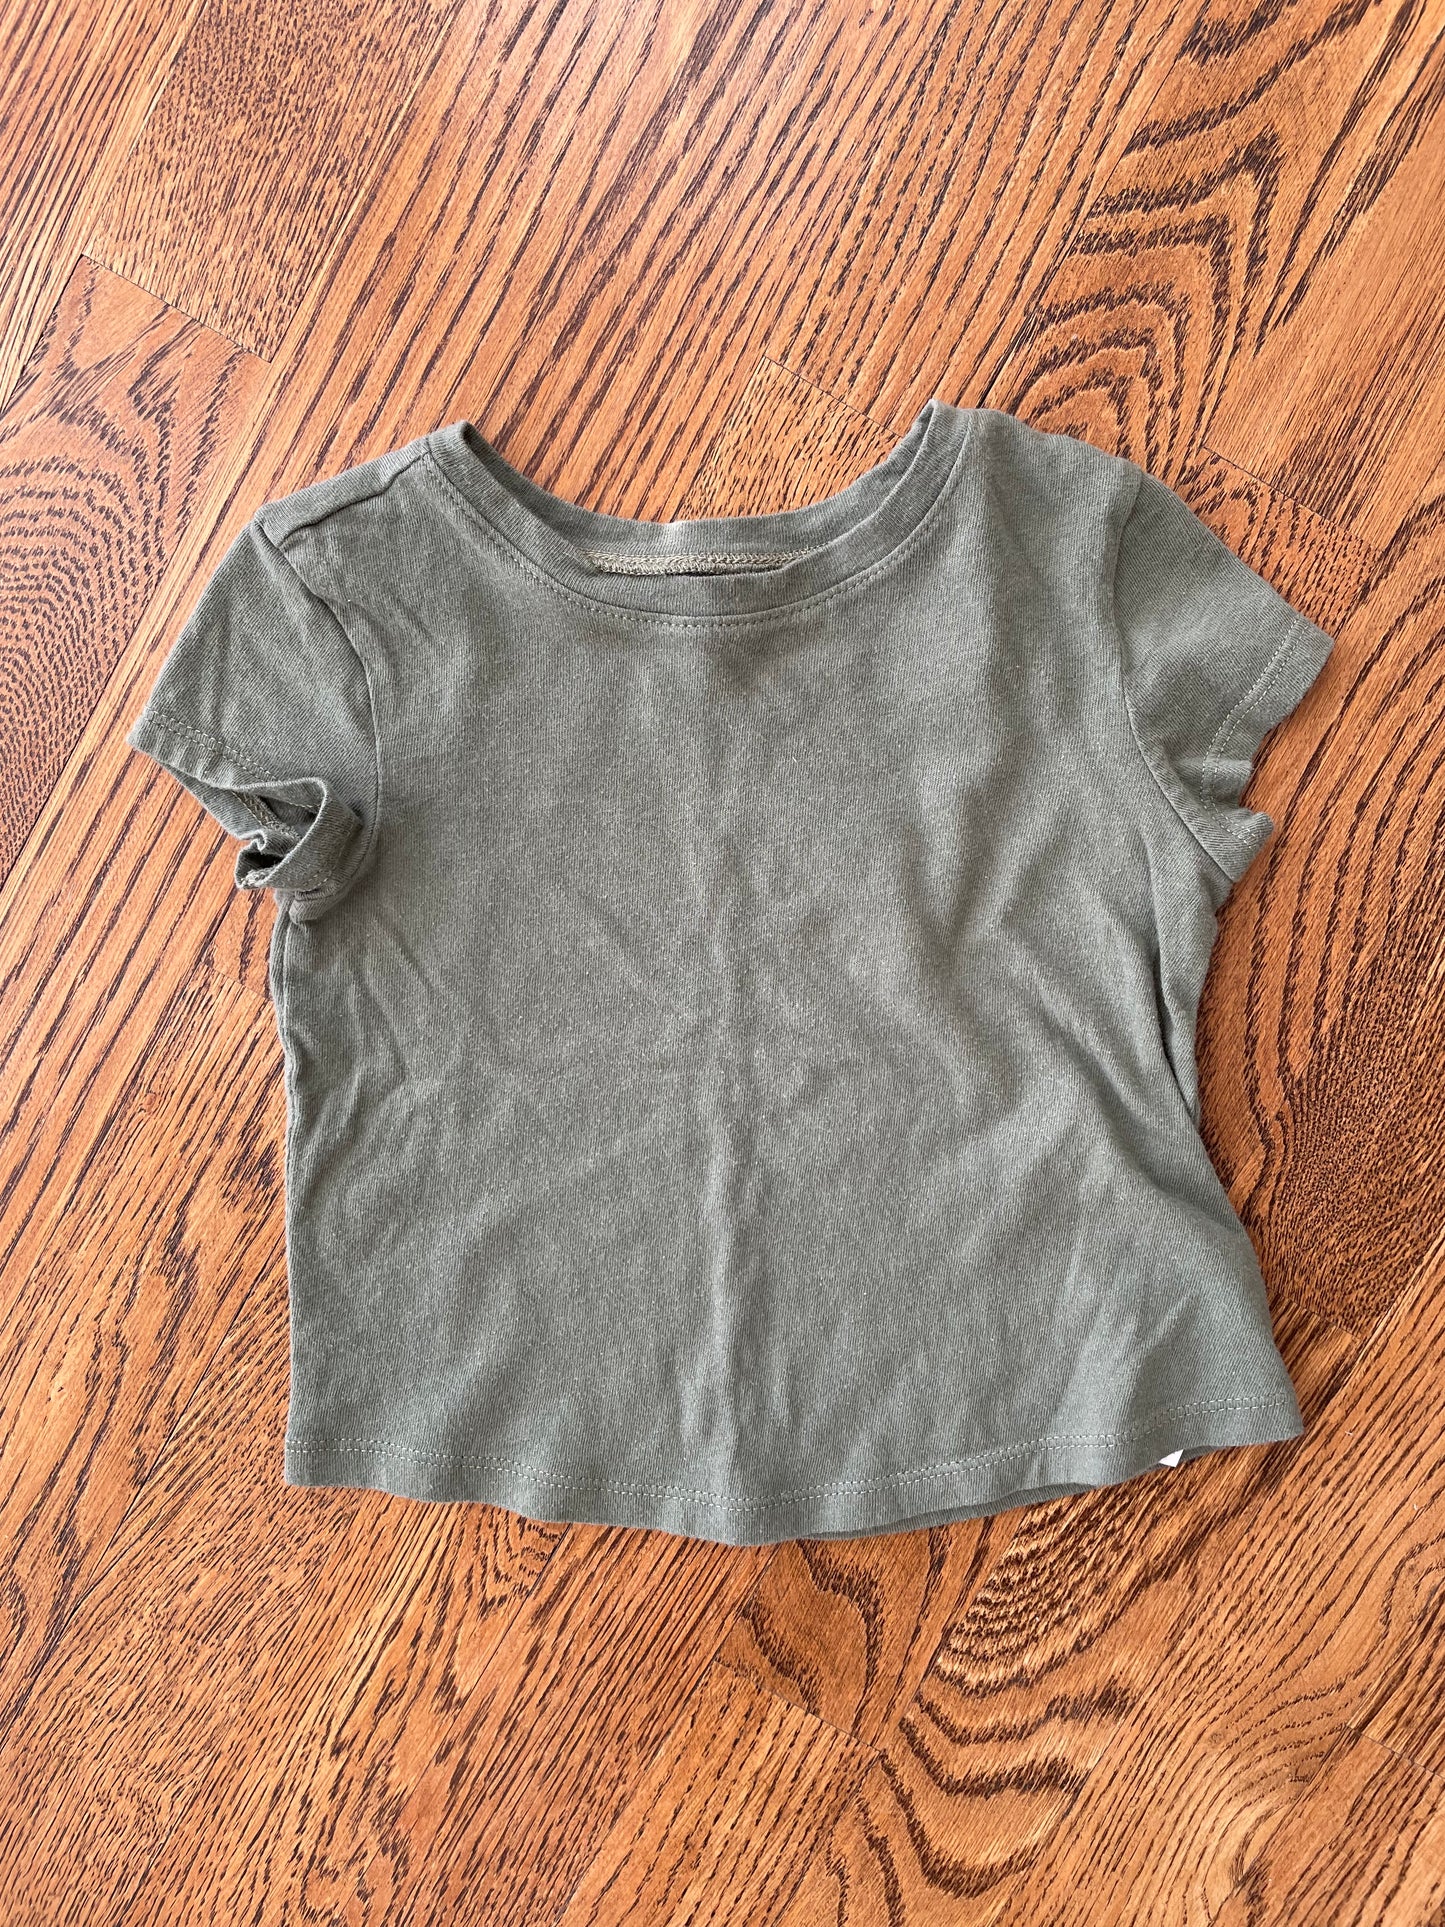 Girls 24m Old Navy Army Green T Shirt